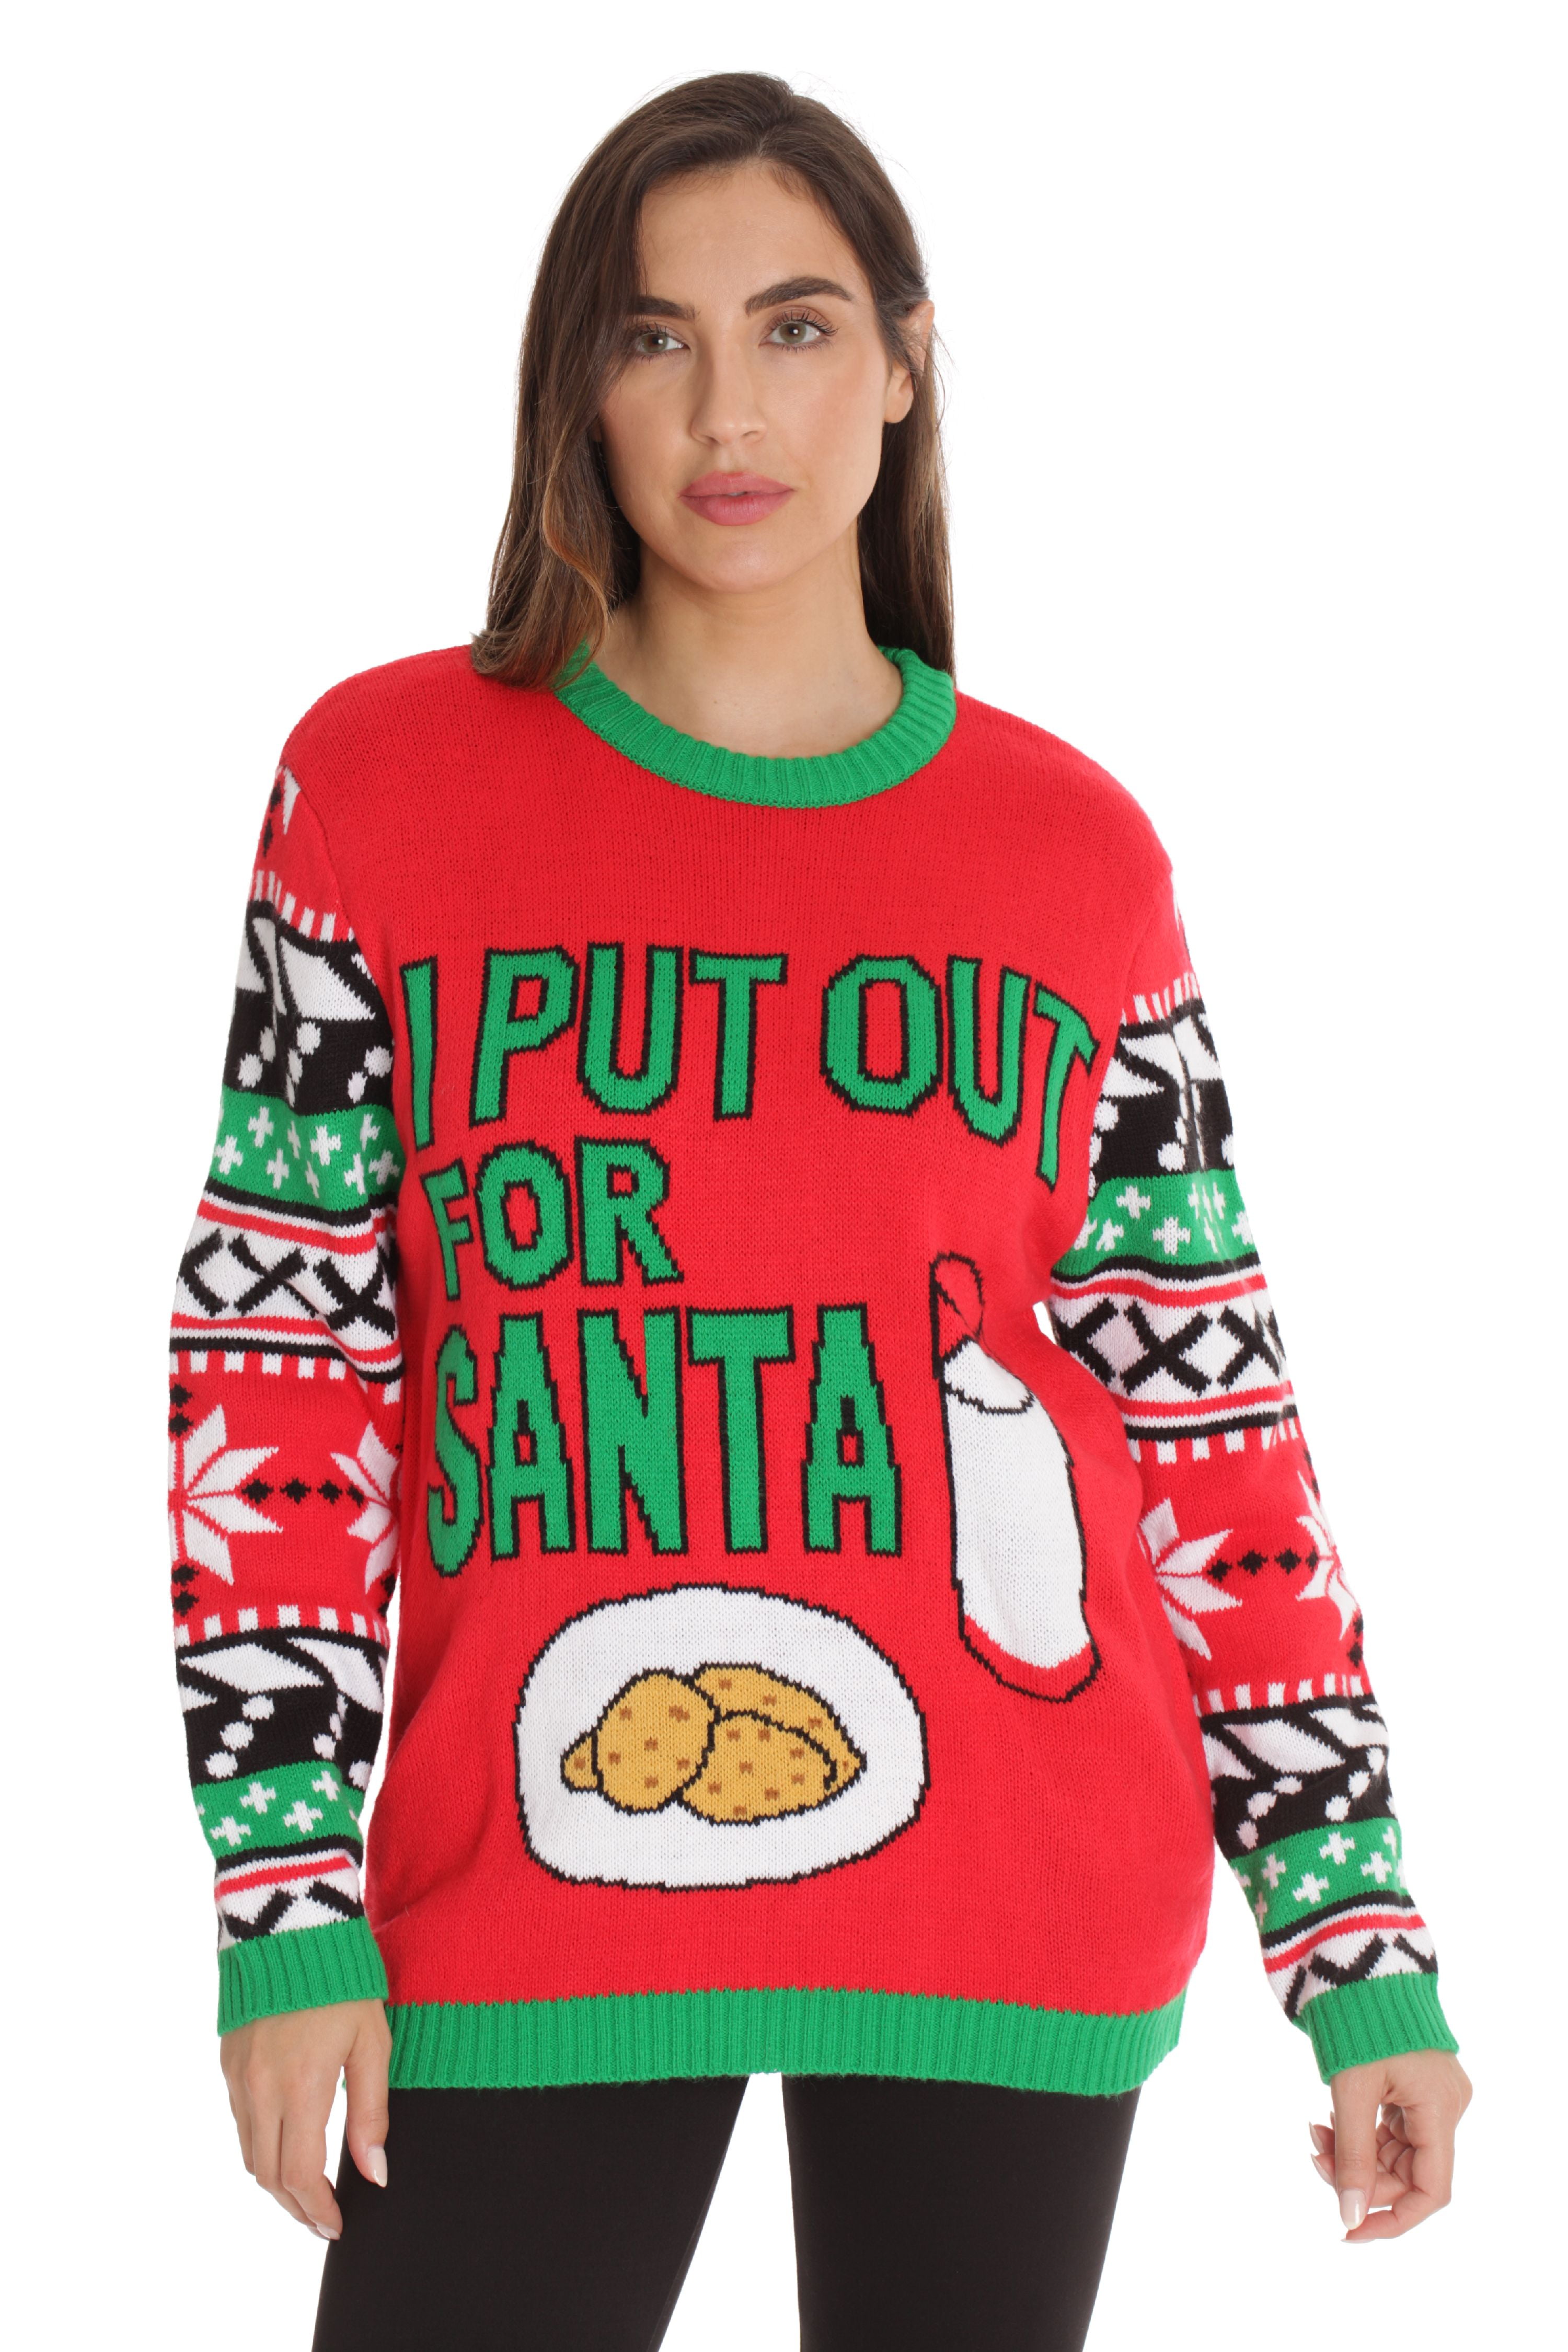 Jolly AF Ugly Christmas Holidays Funny DT Crewneck Sweatshirt